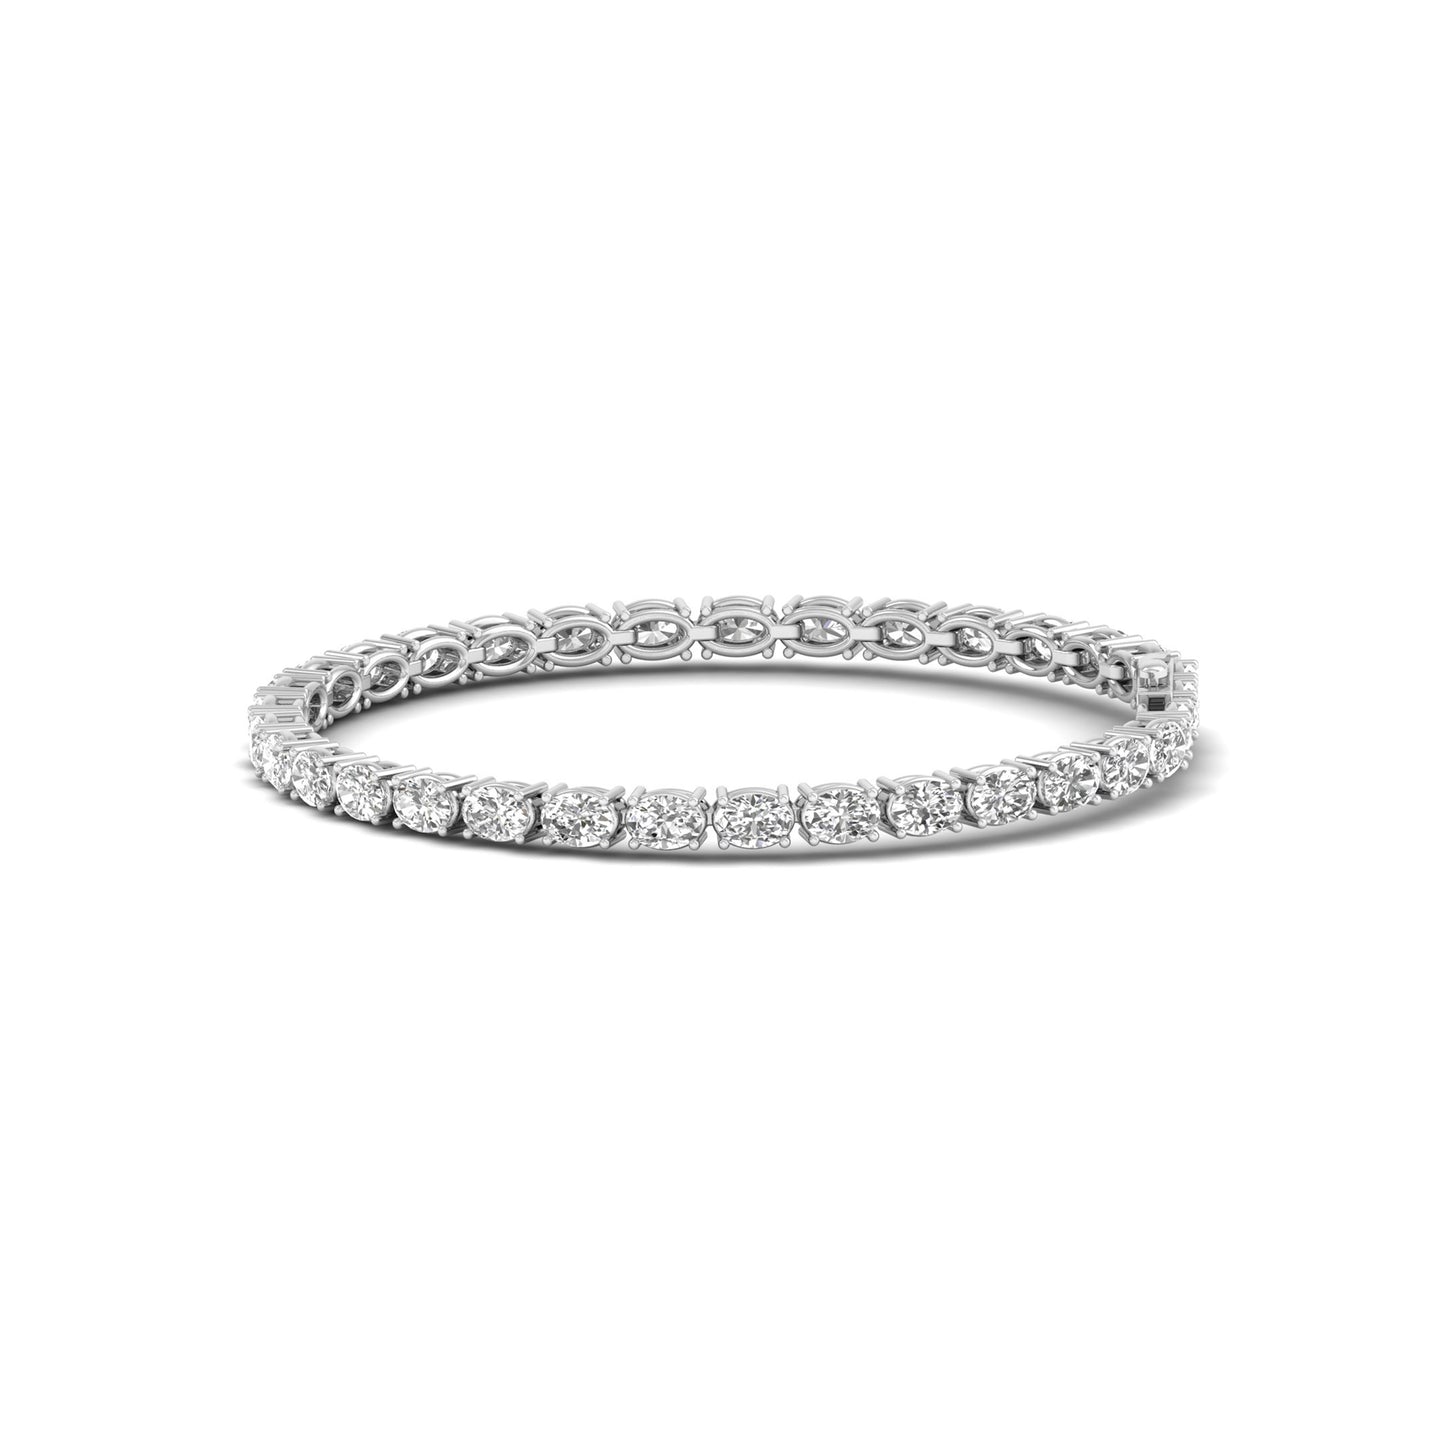 Oval Splendor: Grace Your Wrist with Elegance in Our Lab Grown Diamond Bracelet in Oval Shape!